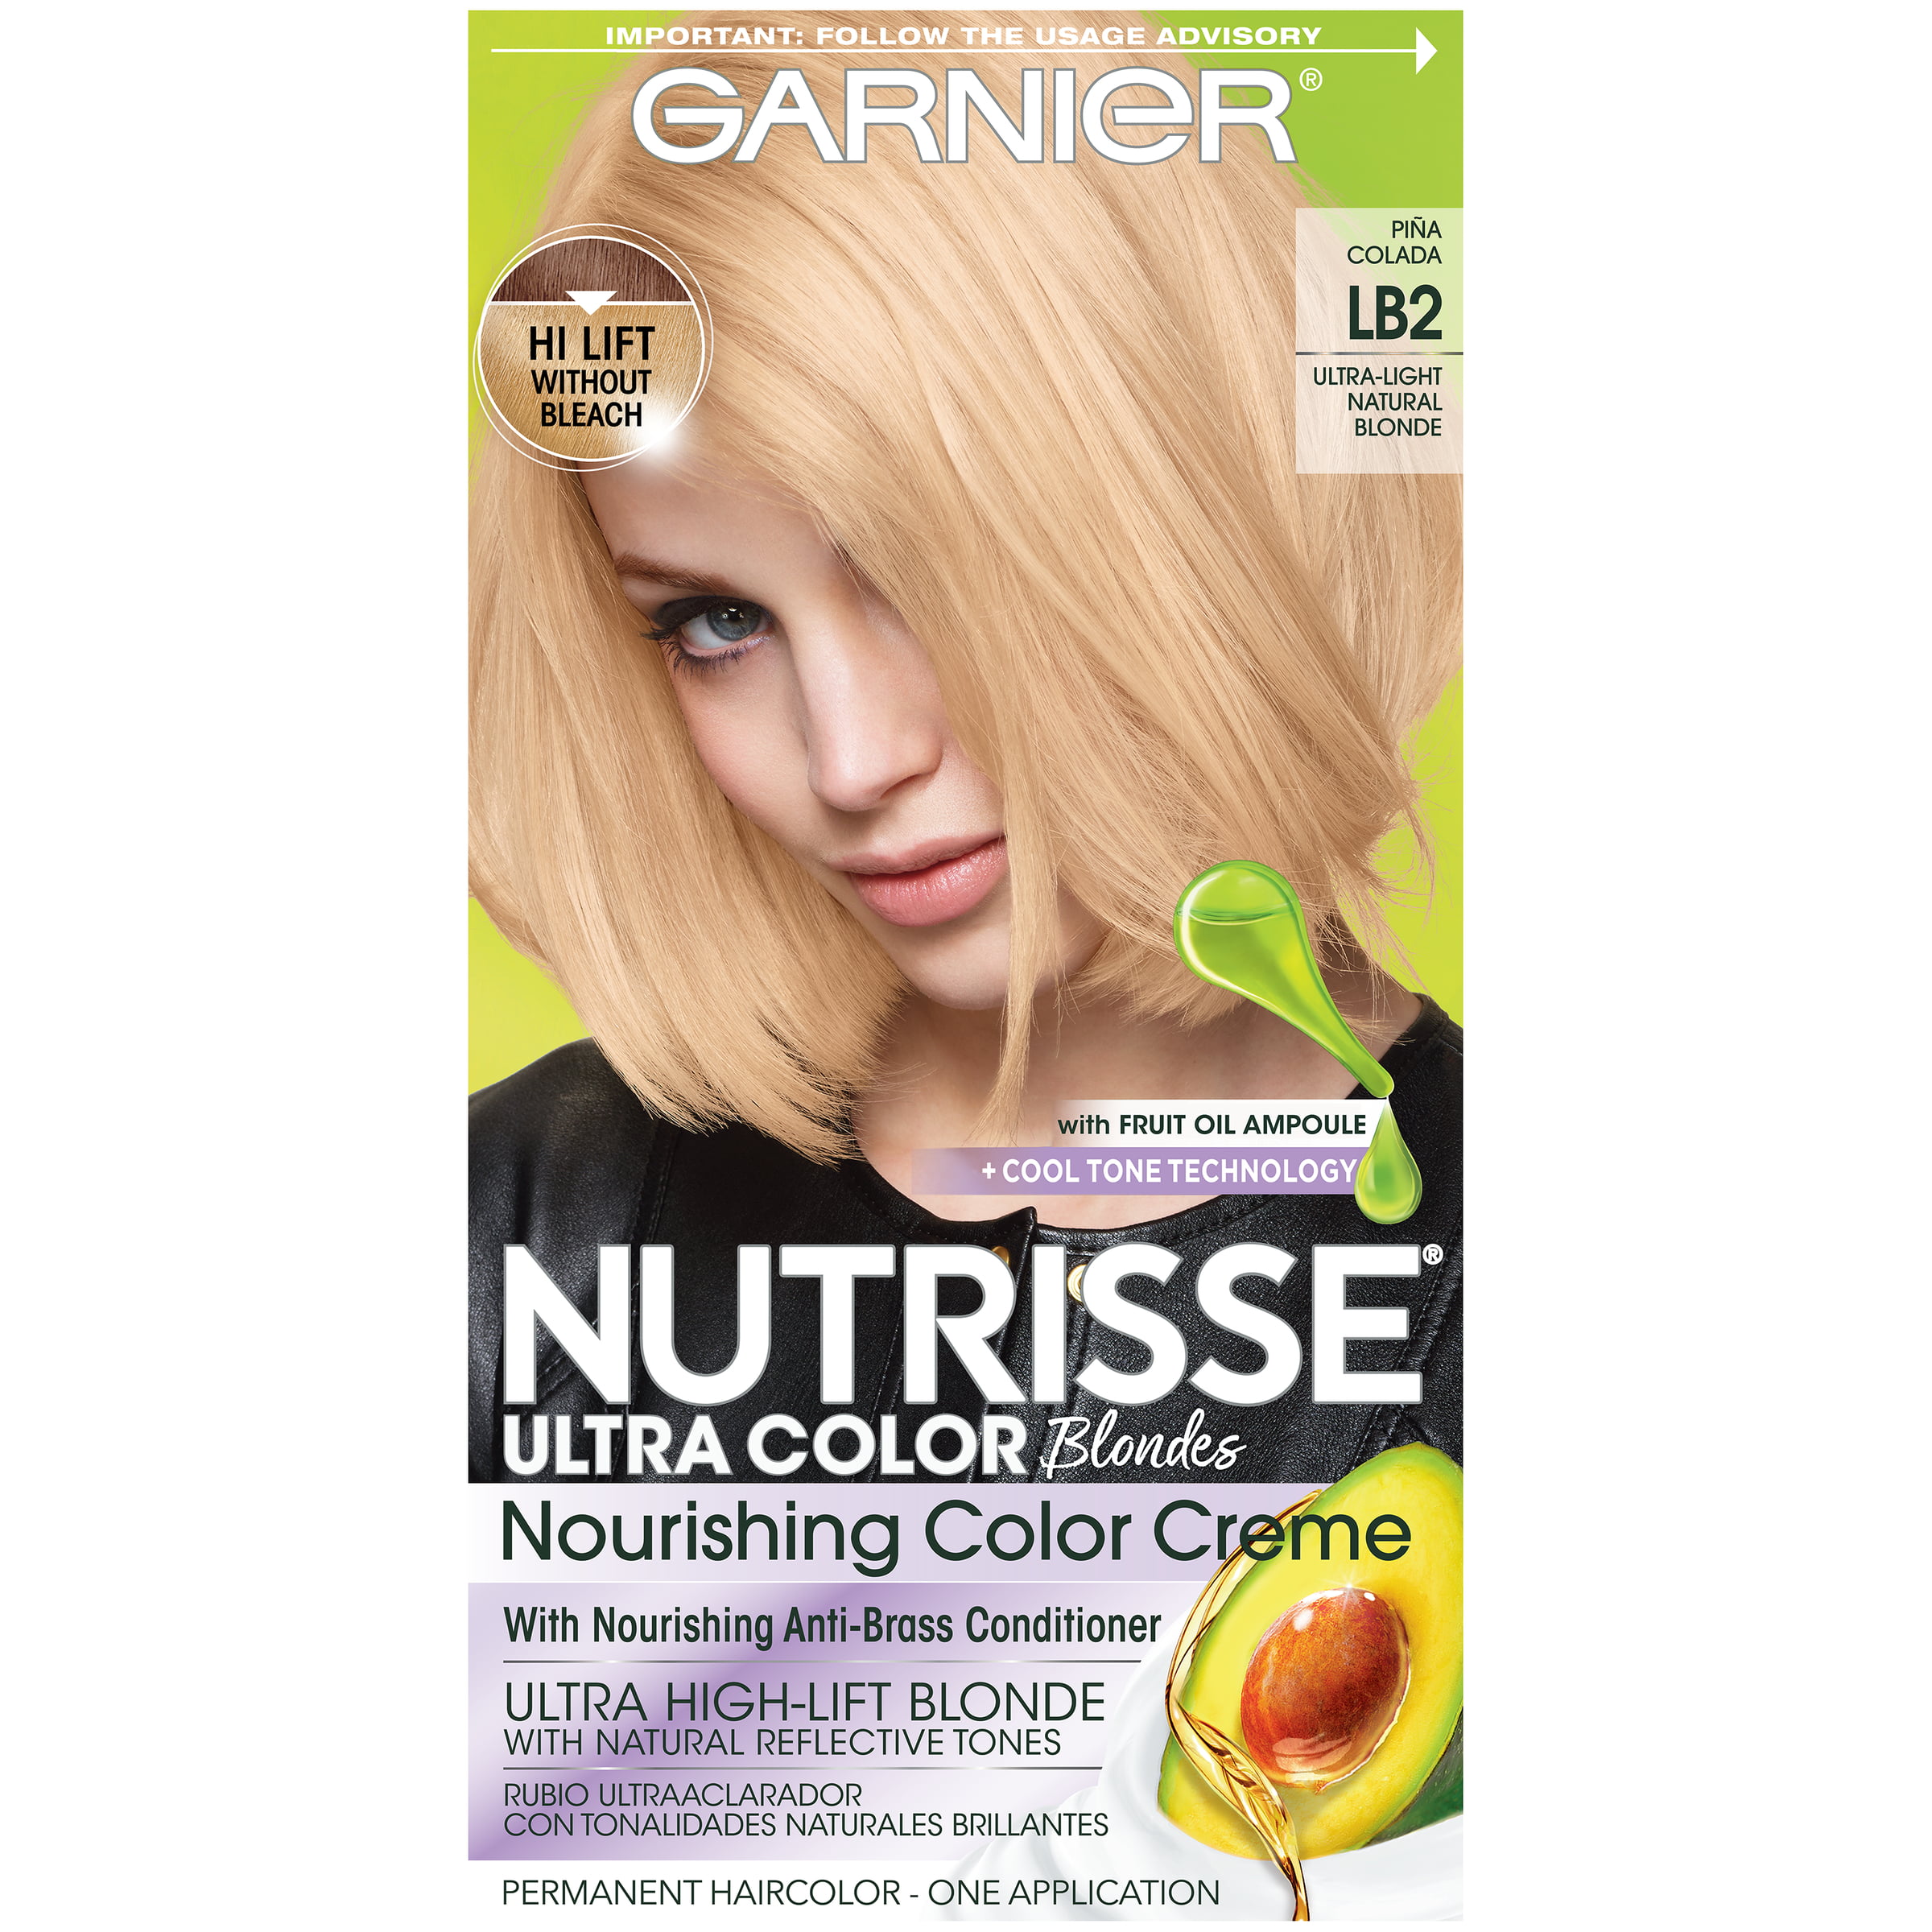 Garnier Nutrisse Nourishing Hair Color Creme, LB2 Ultra Light Natural Blonde,  1 Kit 